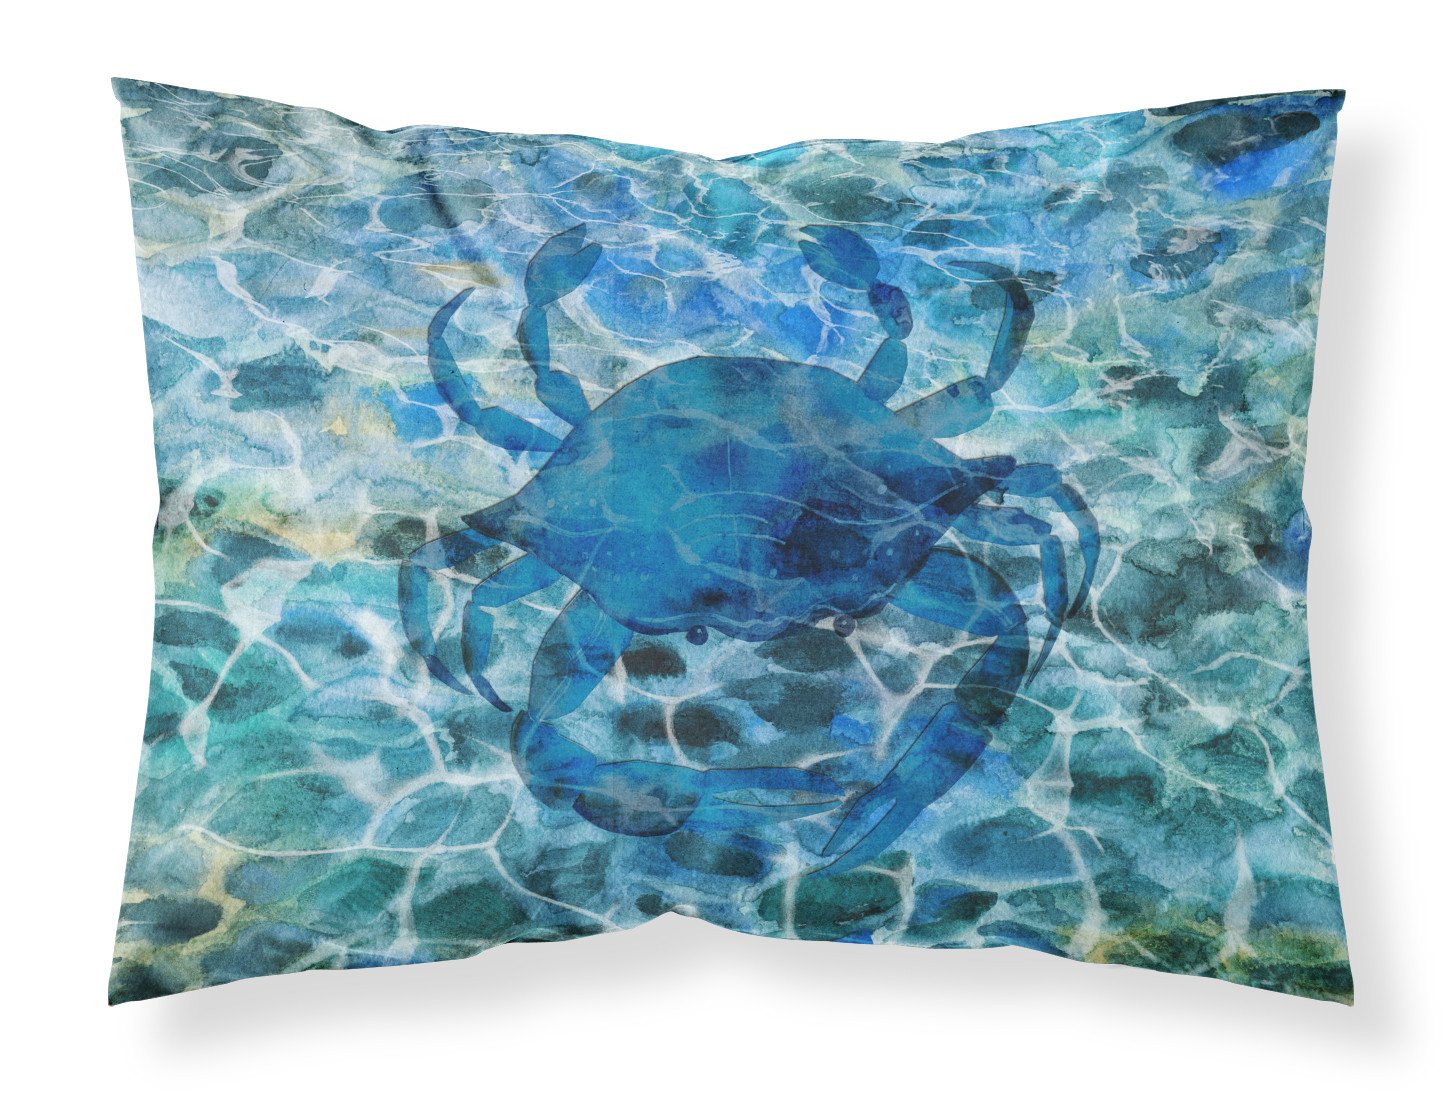 Blue Crab Under Water Fabric Standard Pillowcase BB5369PILLOWCASE by Caroline's Treasures